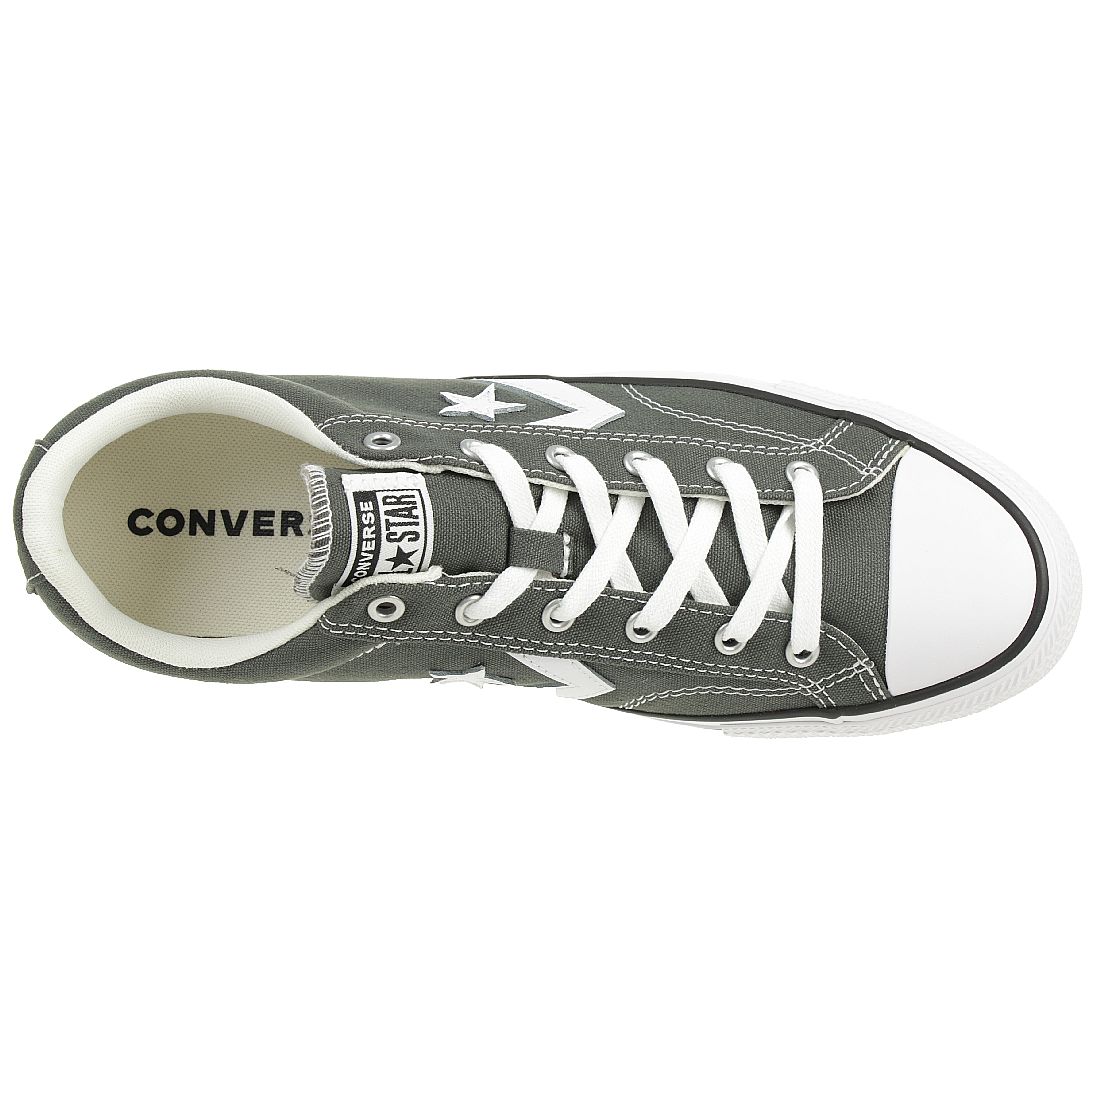 Converse STAR PLAYER OX Schuhe Sneaker Canvas grau 165462C